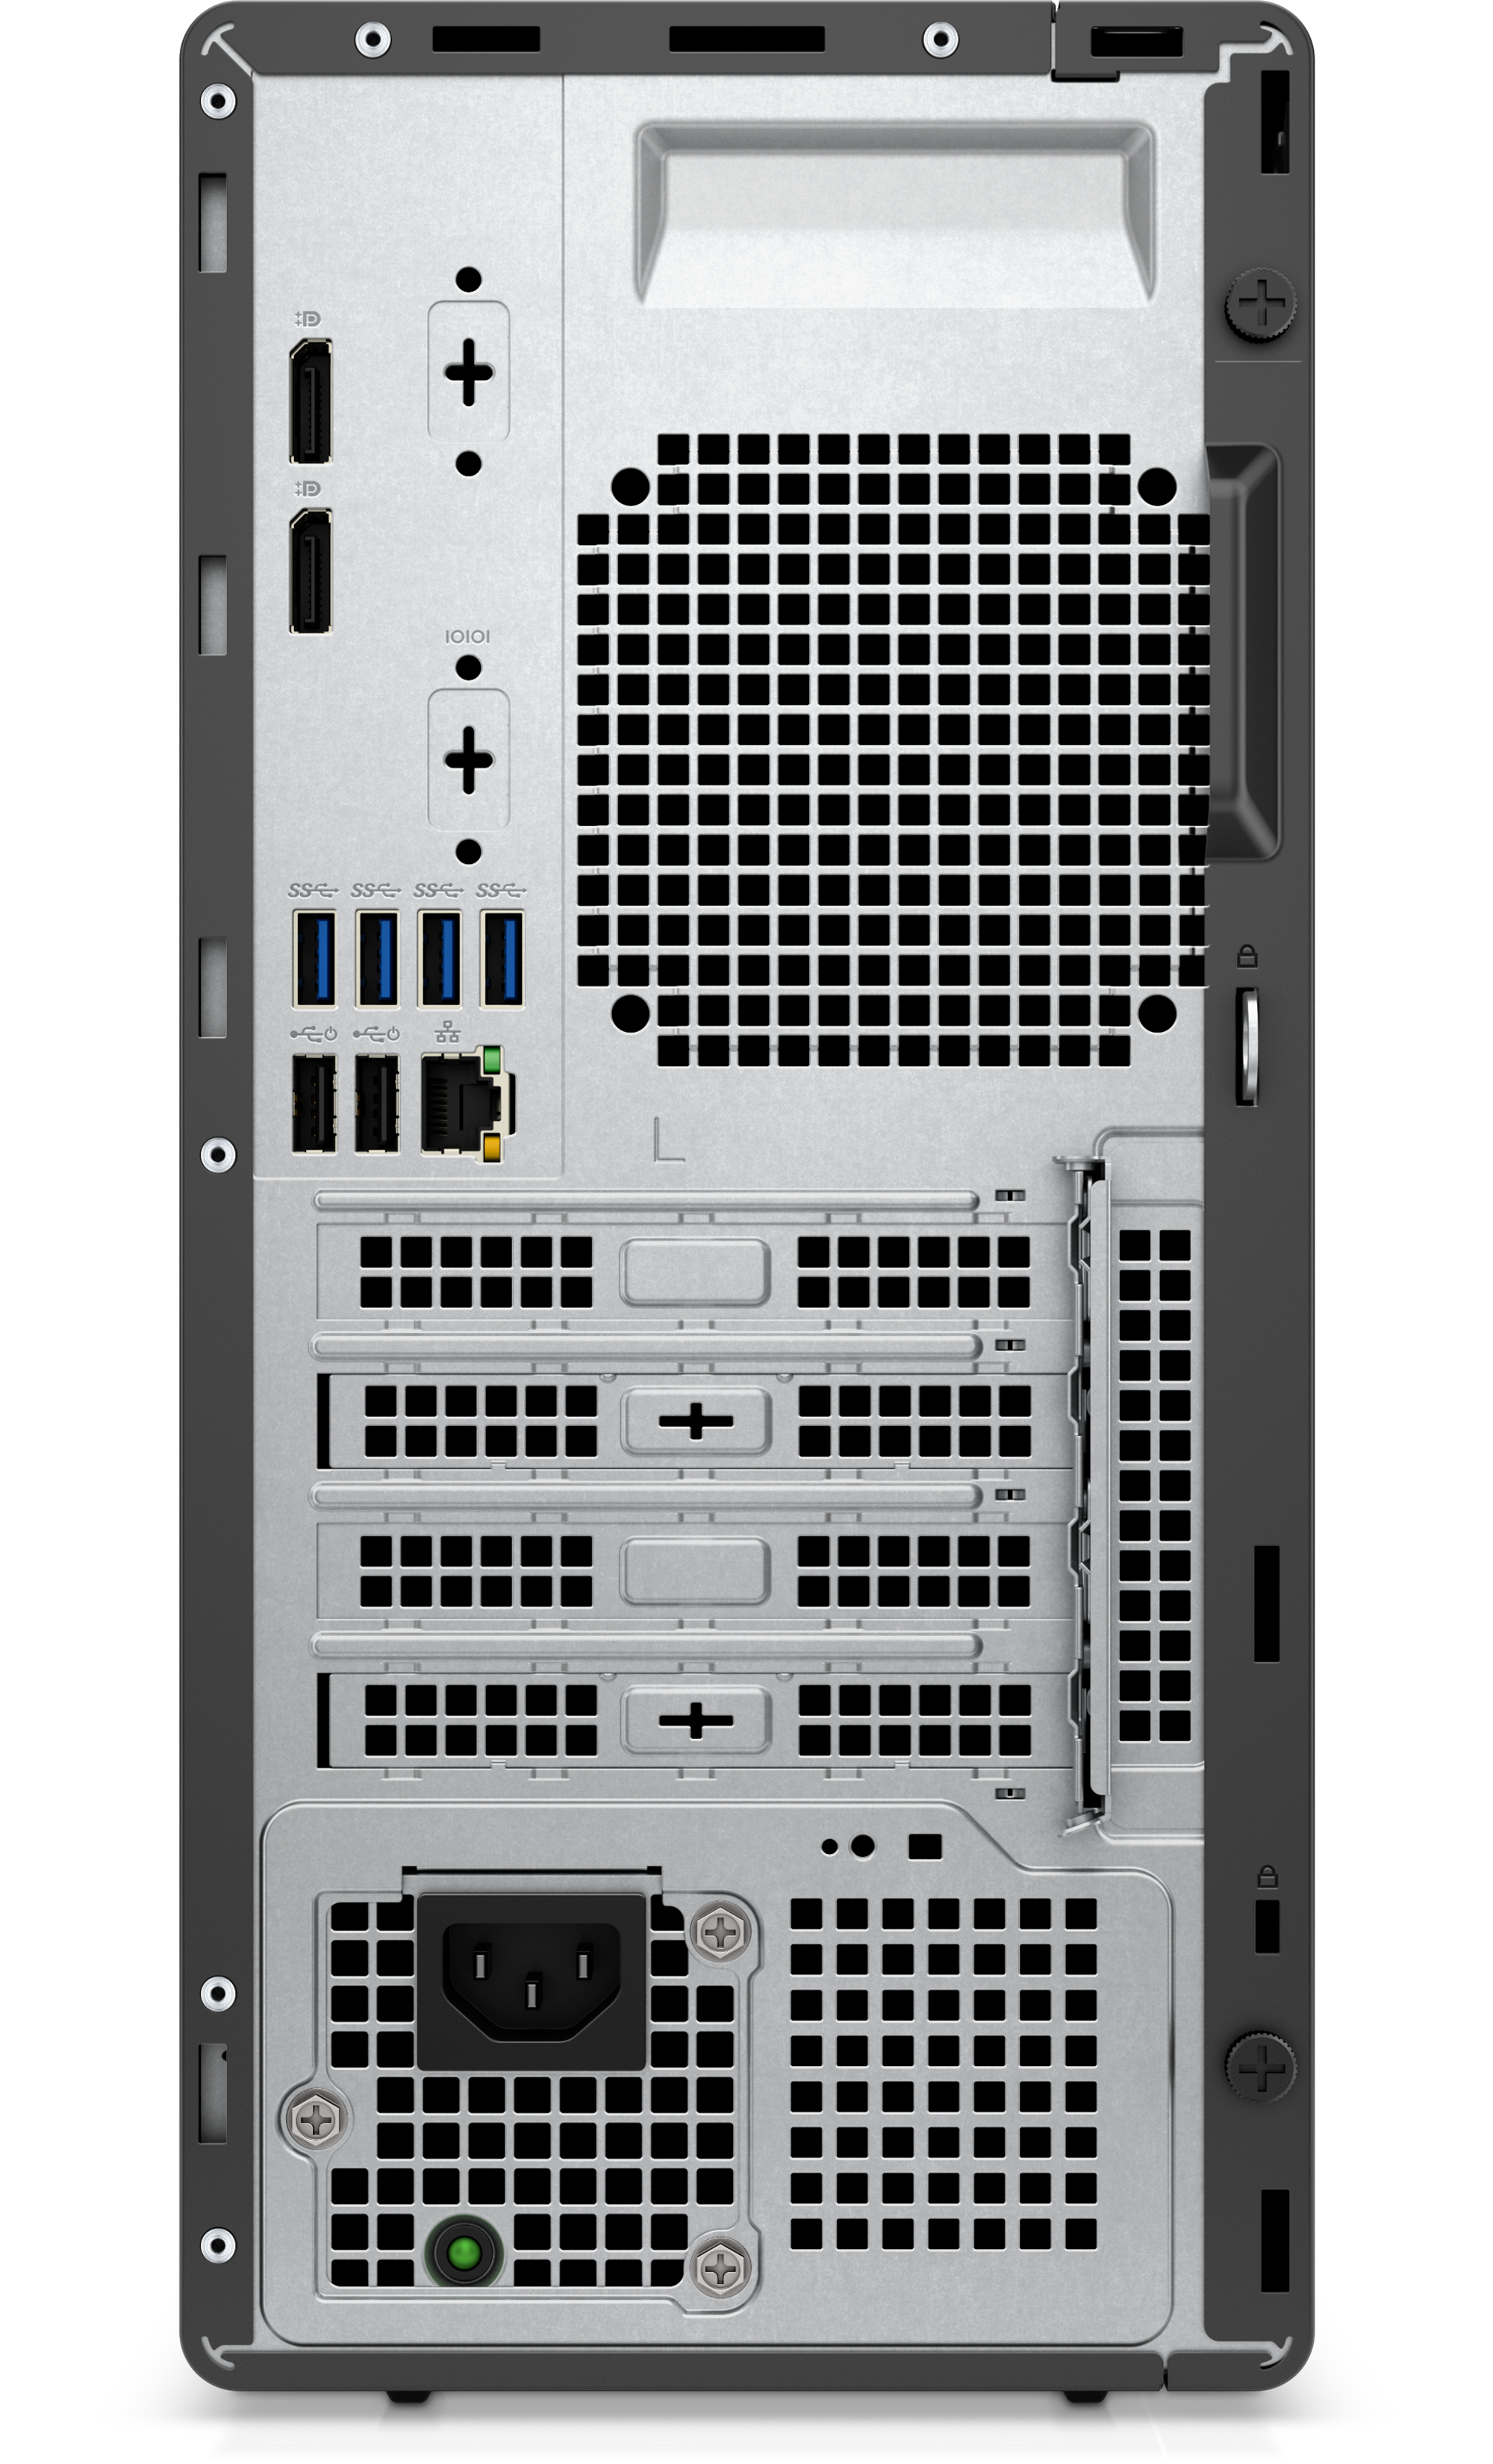 Dell OptiPlex 5000 Tower - Benson Computers